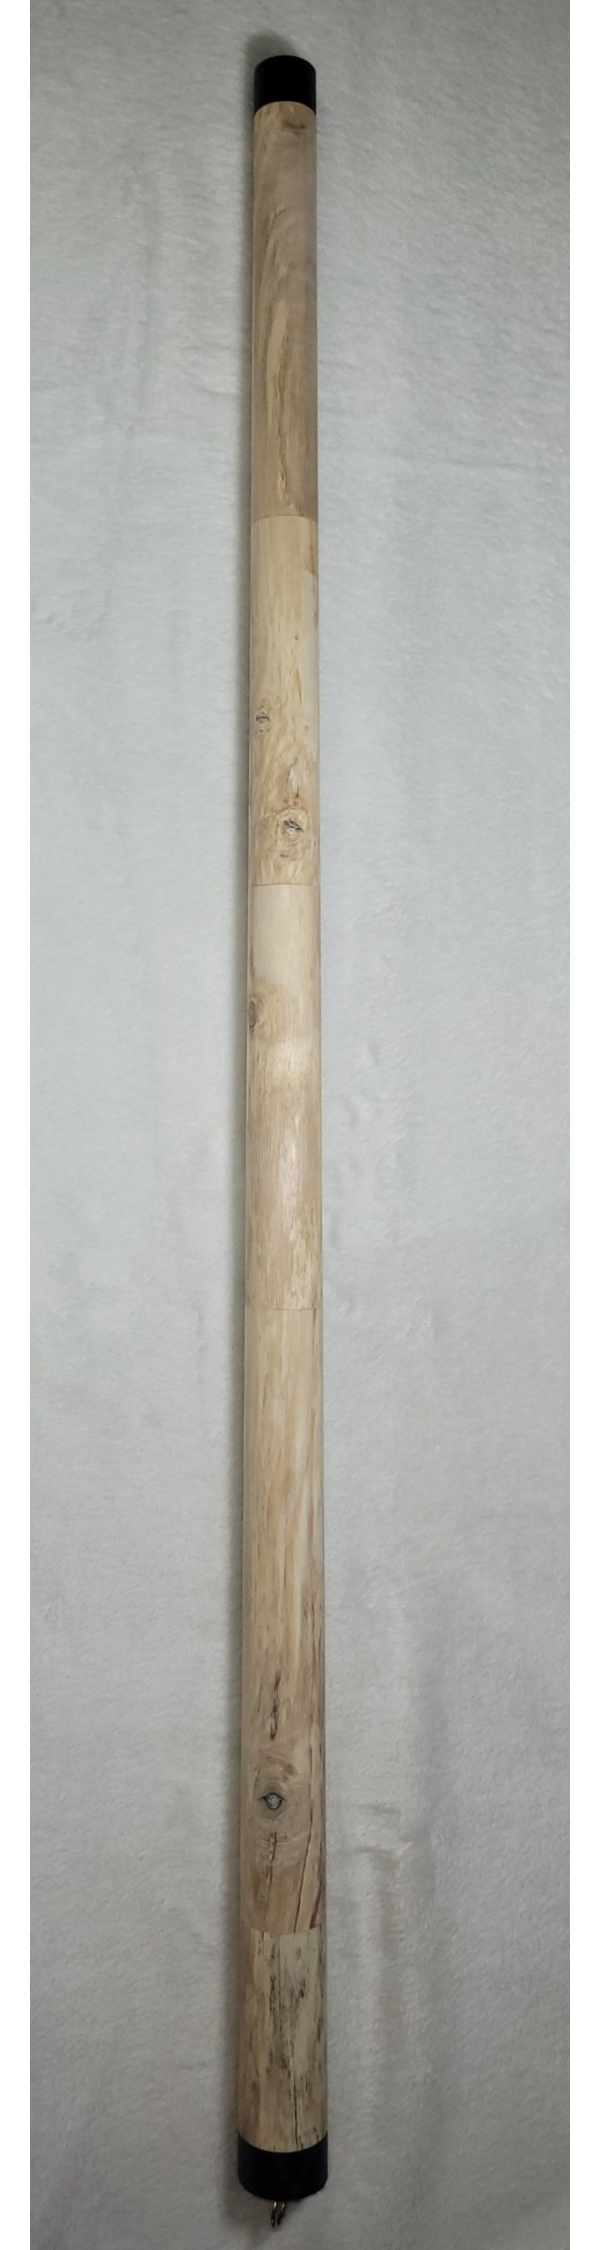 Stick #020 "Plain Ash Stick"